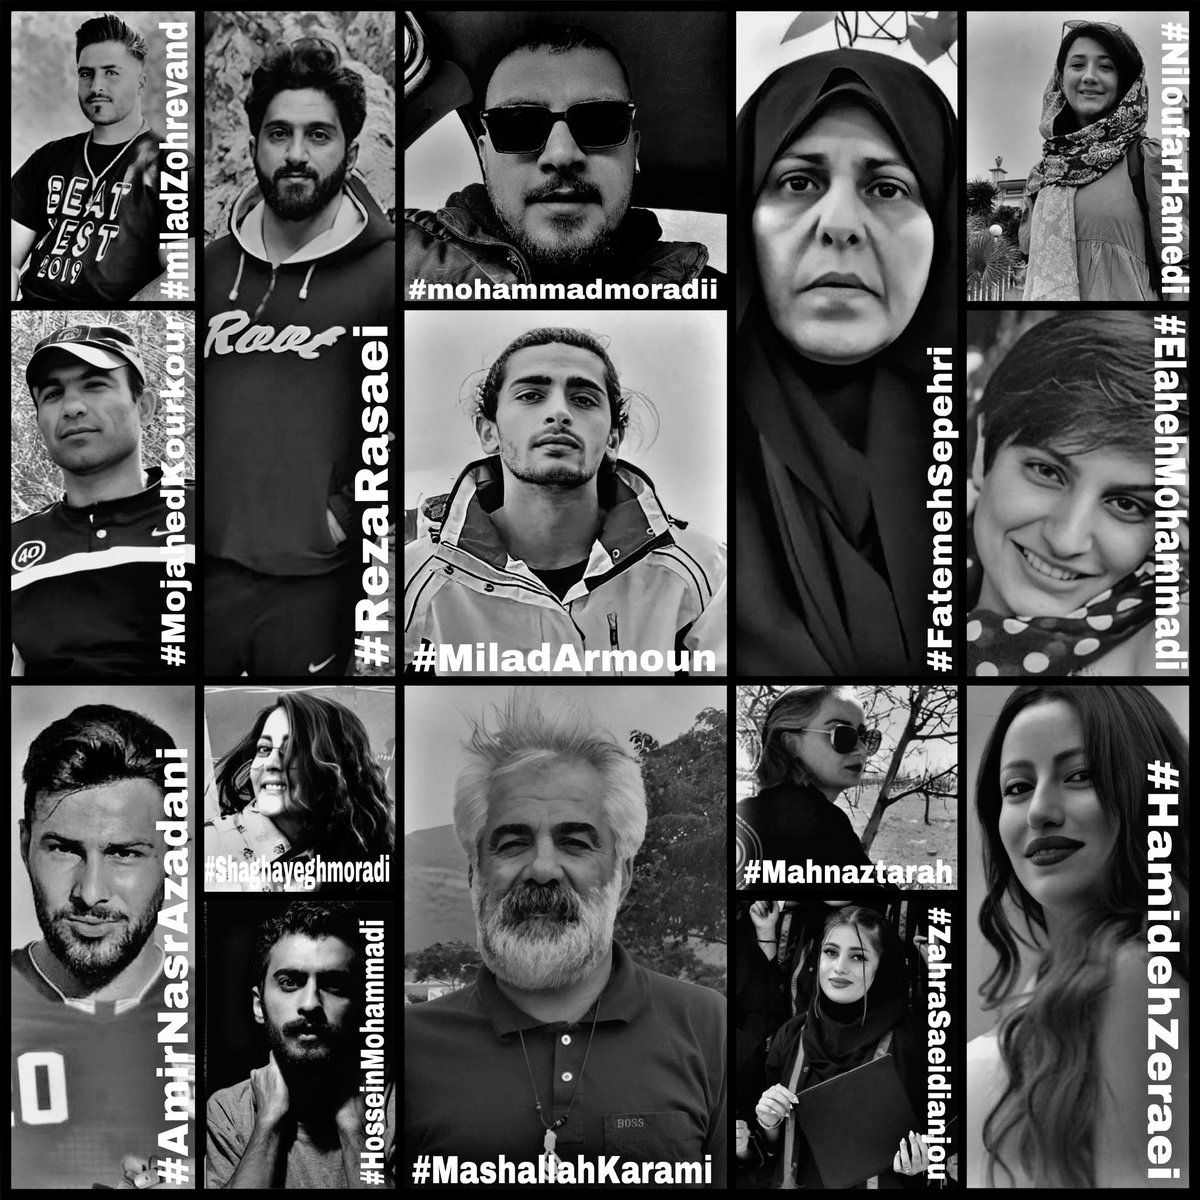 @freedomhouse 1. #ManouchehrBakhtiari
2. #MashallahKarami
3. #Nahidshirpisheh 
4. #zahrasaeidianjou
5. #MahboubehRezaei
6. #SamanYasin
7. #MiladArmoun
8. #ArsamMohammadi1